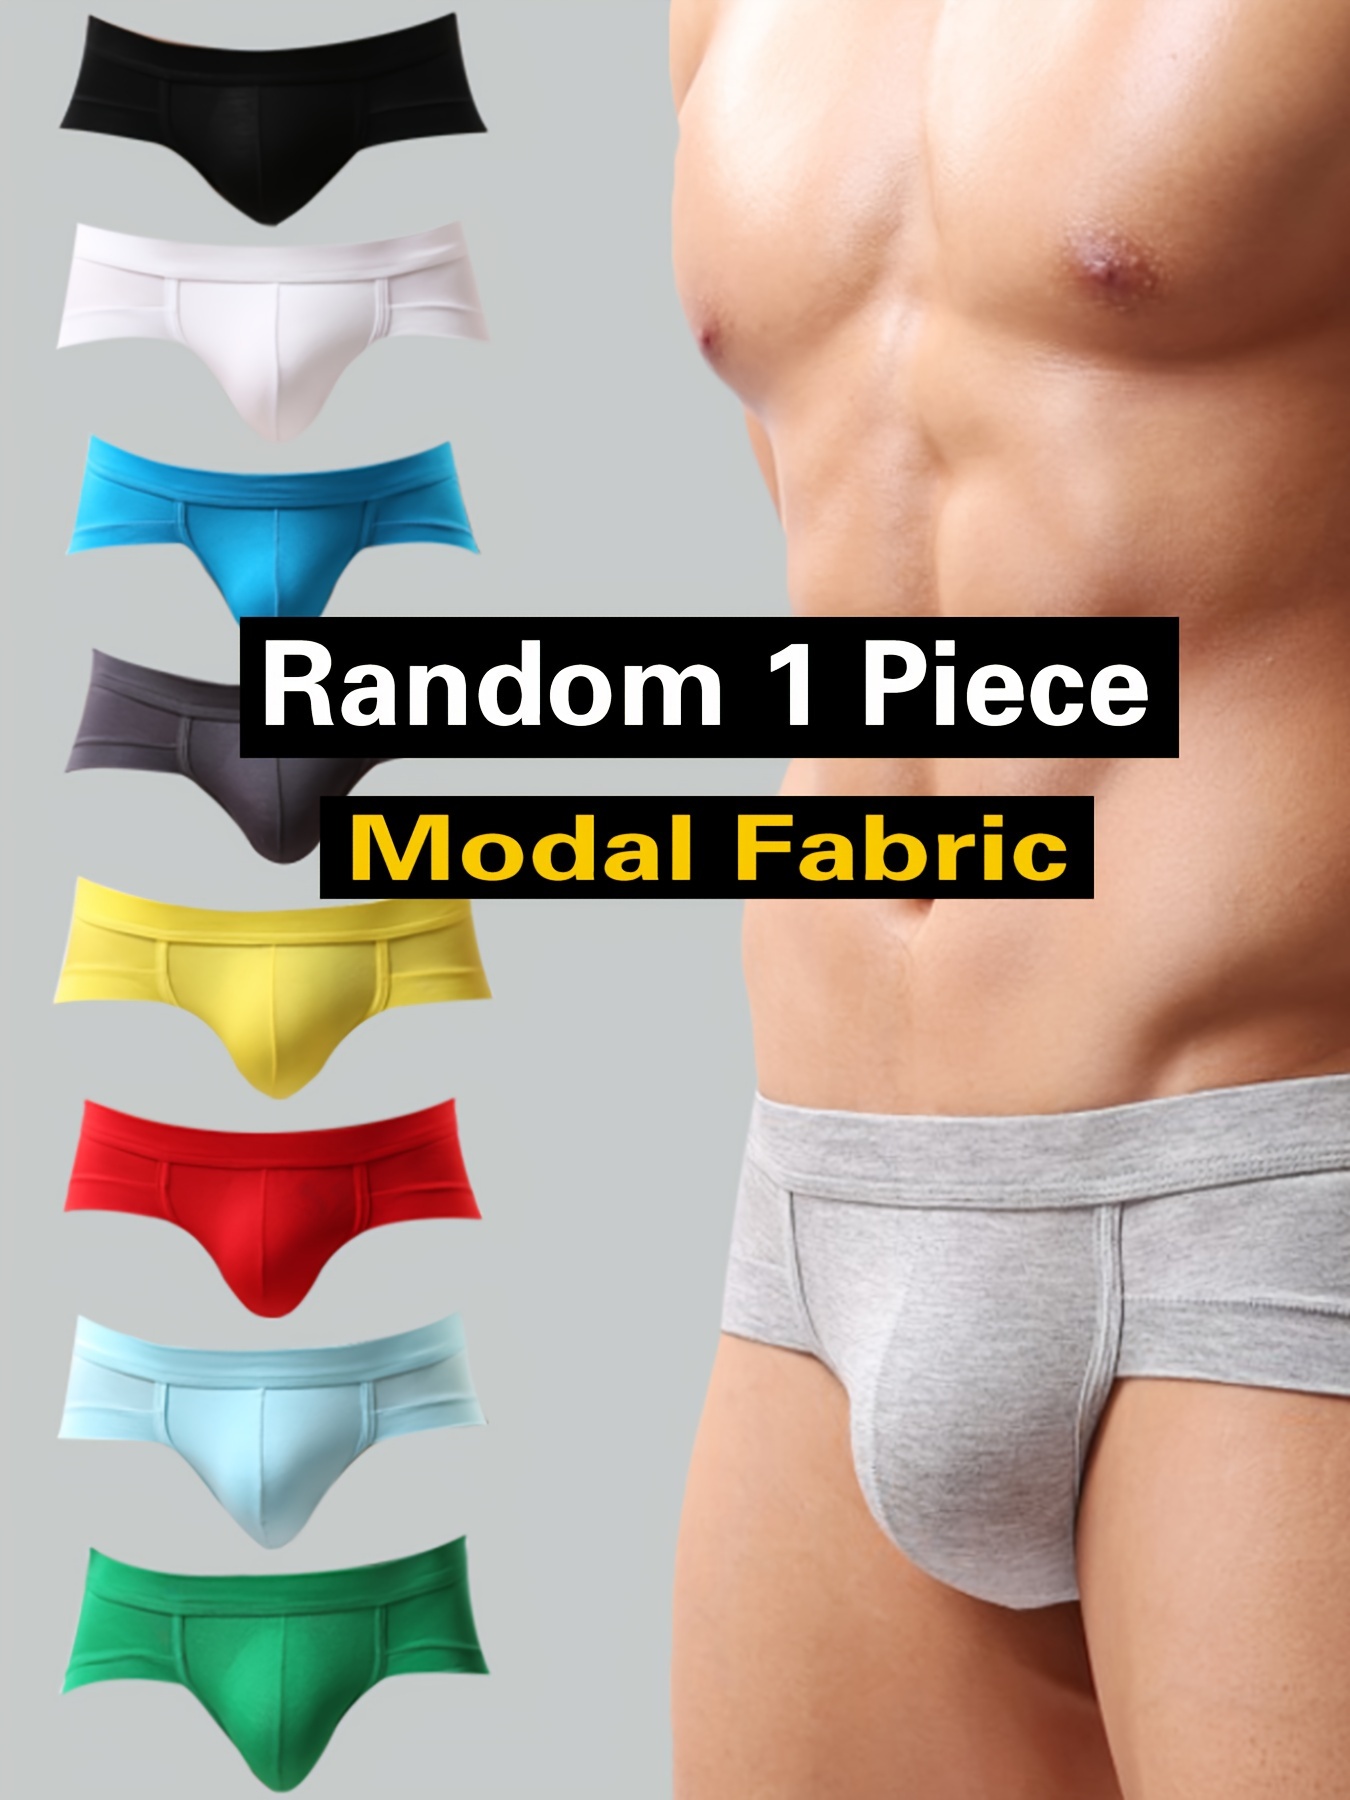 5pcs Men's Underwear, Fashion Breathable Soft Comfy Stretchy Briefs, Casual  Plain Color Panties, Men's Elastic Pants For Daily Sleep